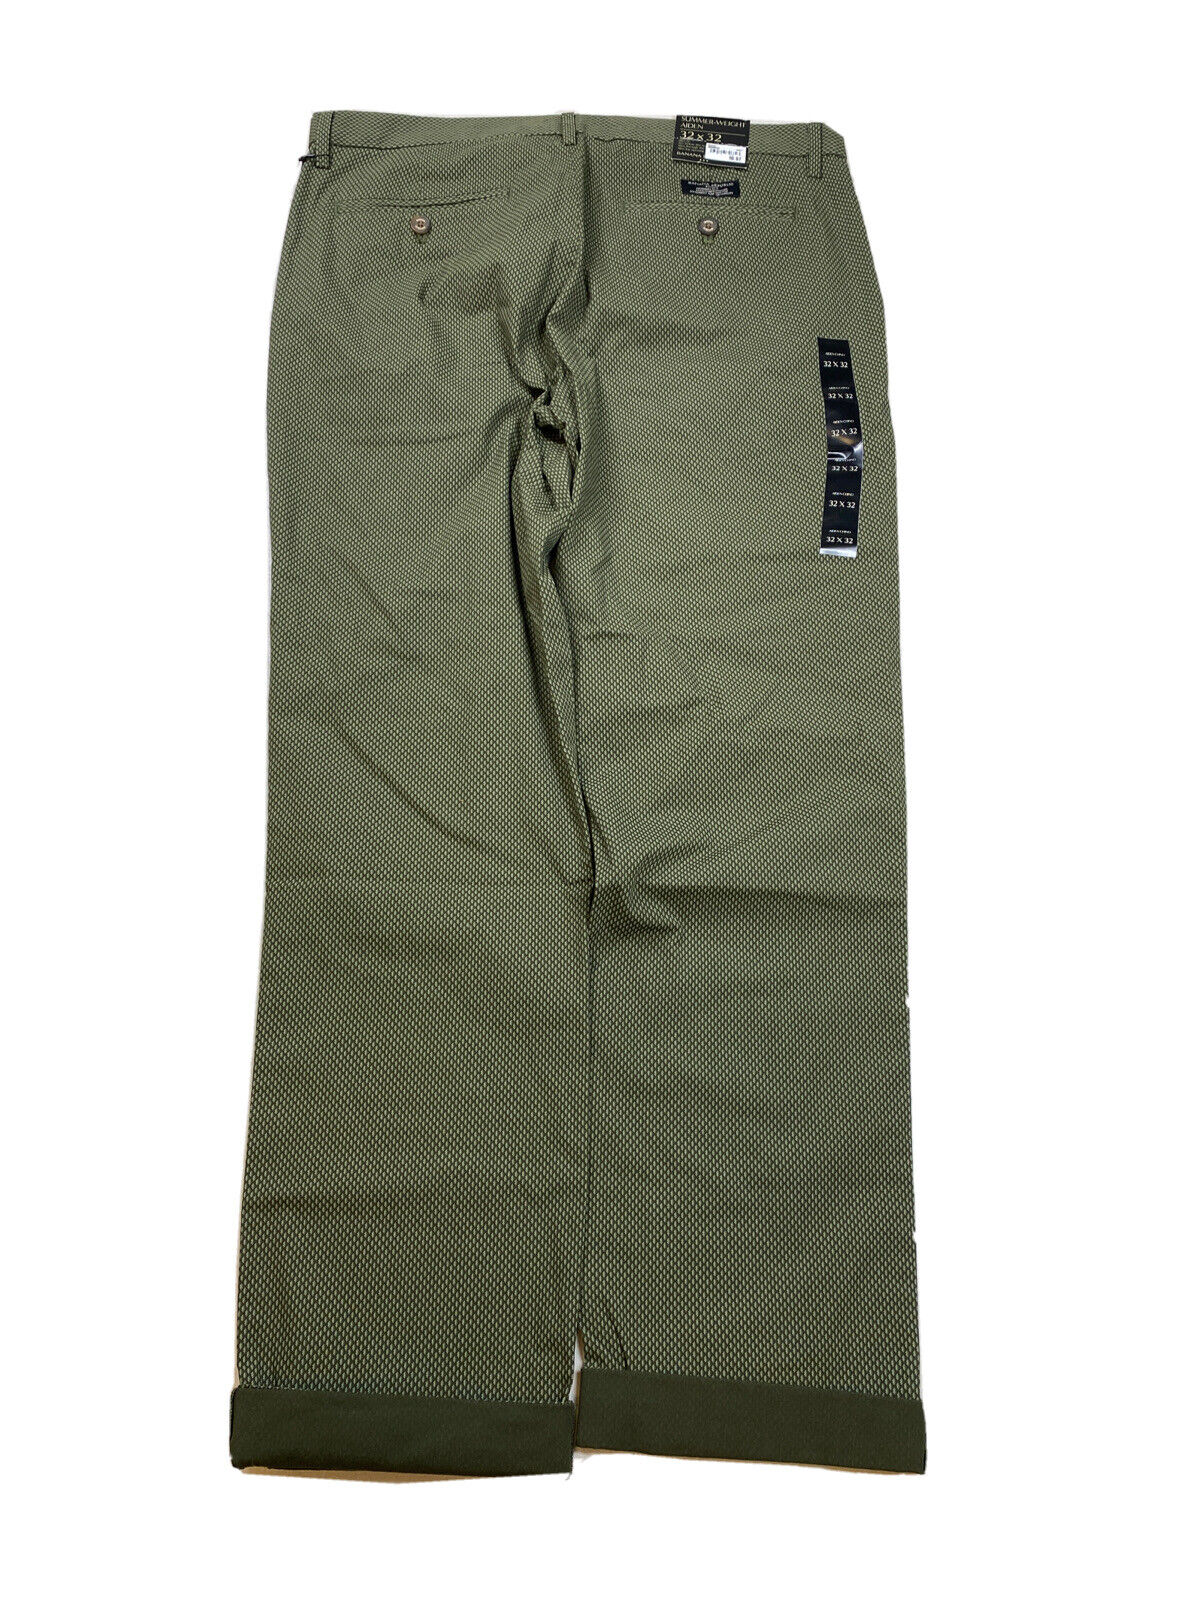 NEW Banana Republic Men's Green Aiden Chino Dress Pants - 32x32